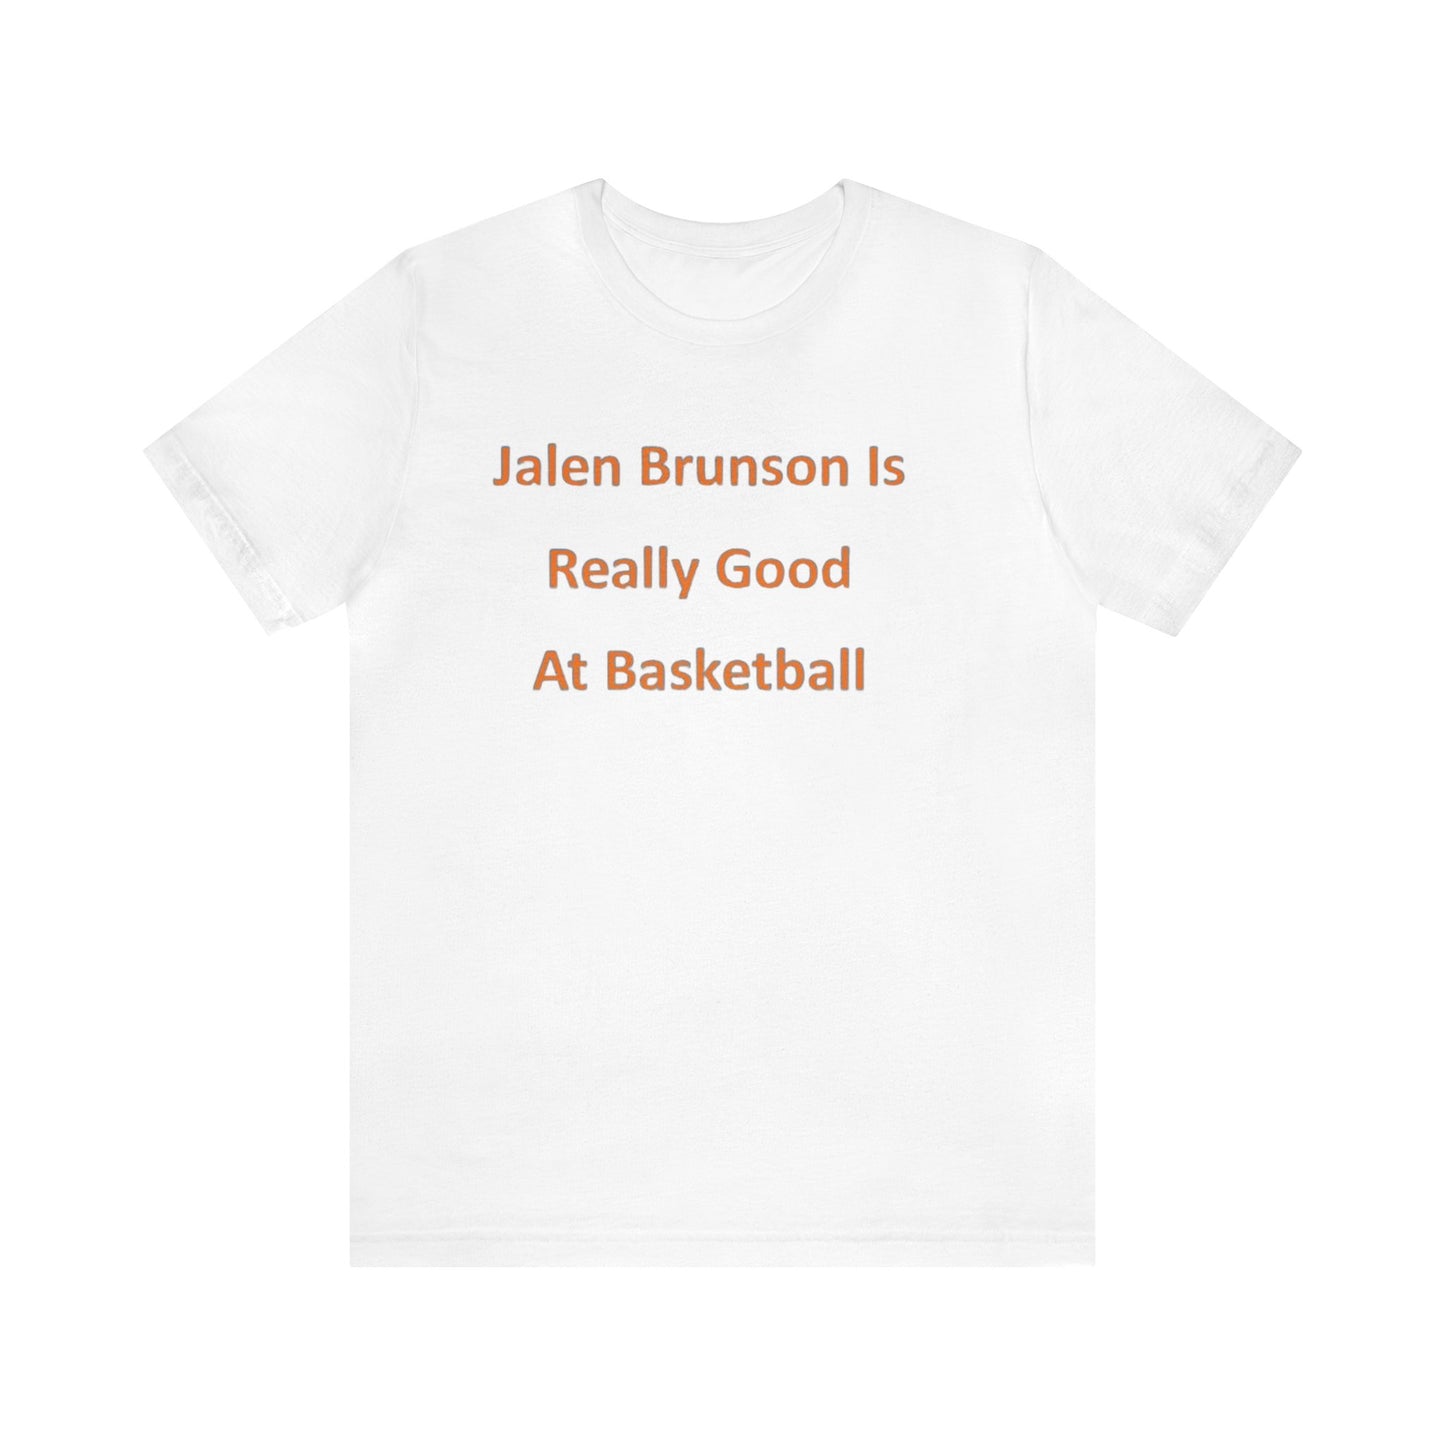 Jalen Brunson Is Really Good At Basketball Tee